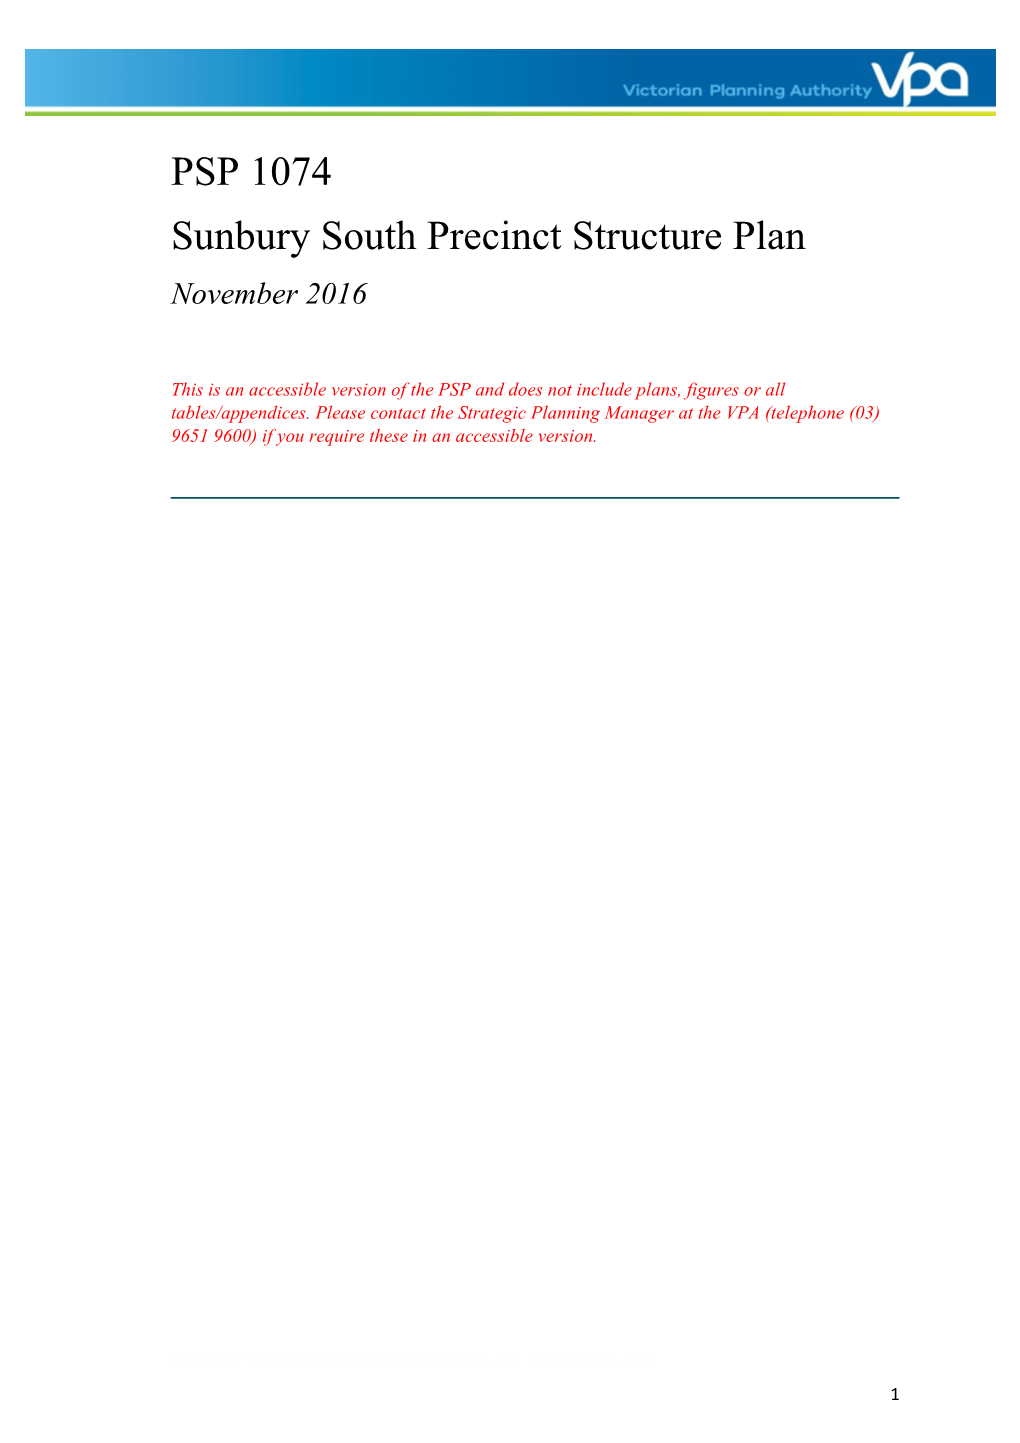 Sunbury South Precinct Structure Plan